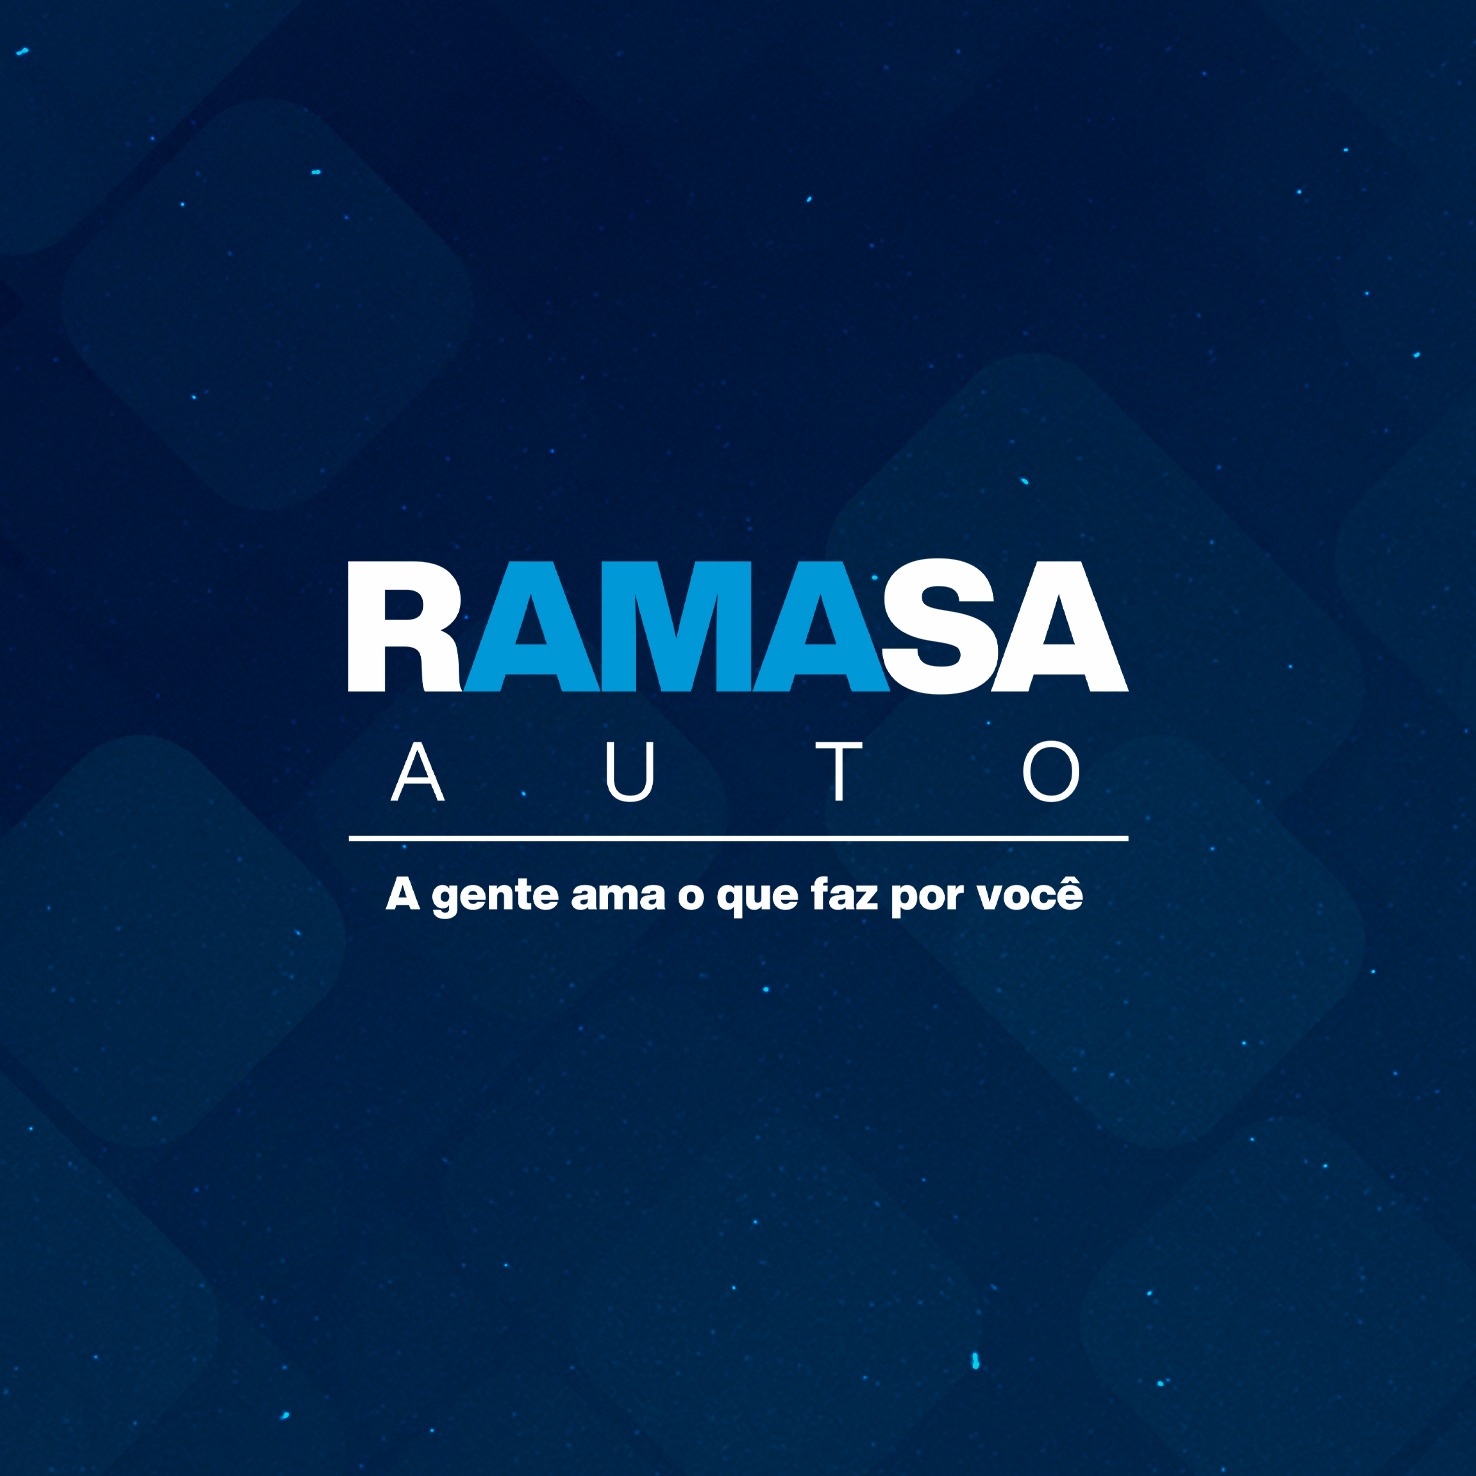 Ramasa Auto está com 42 oportunidades abertas